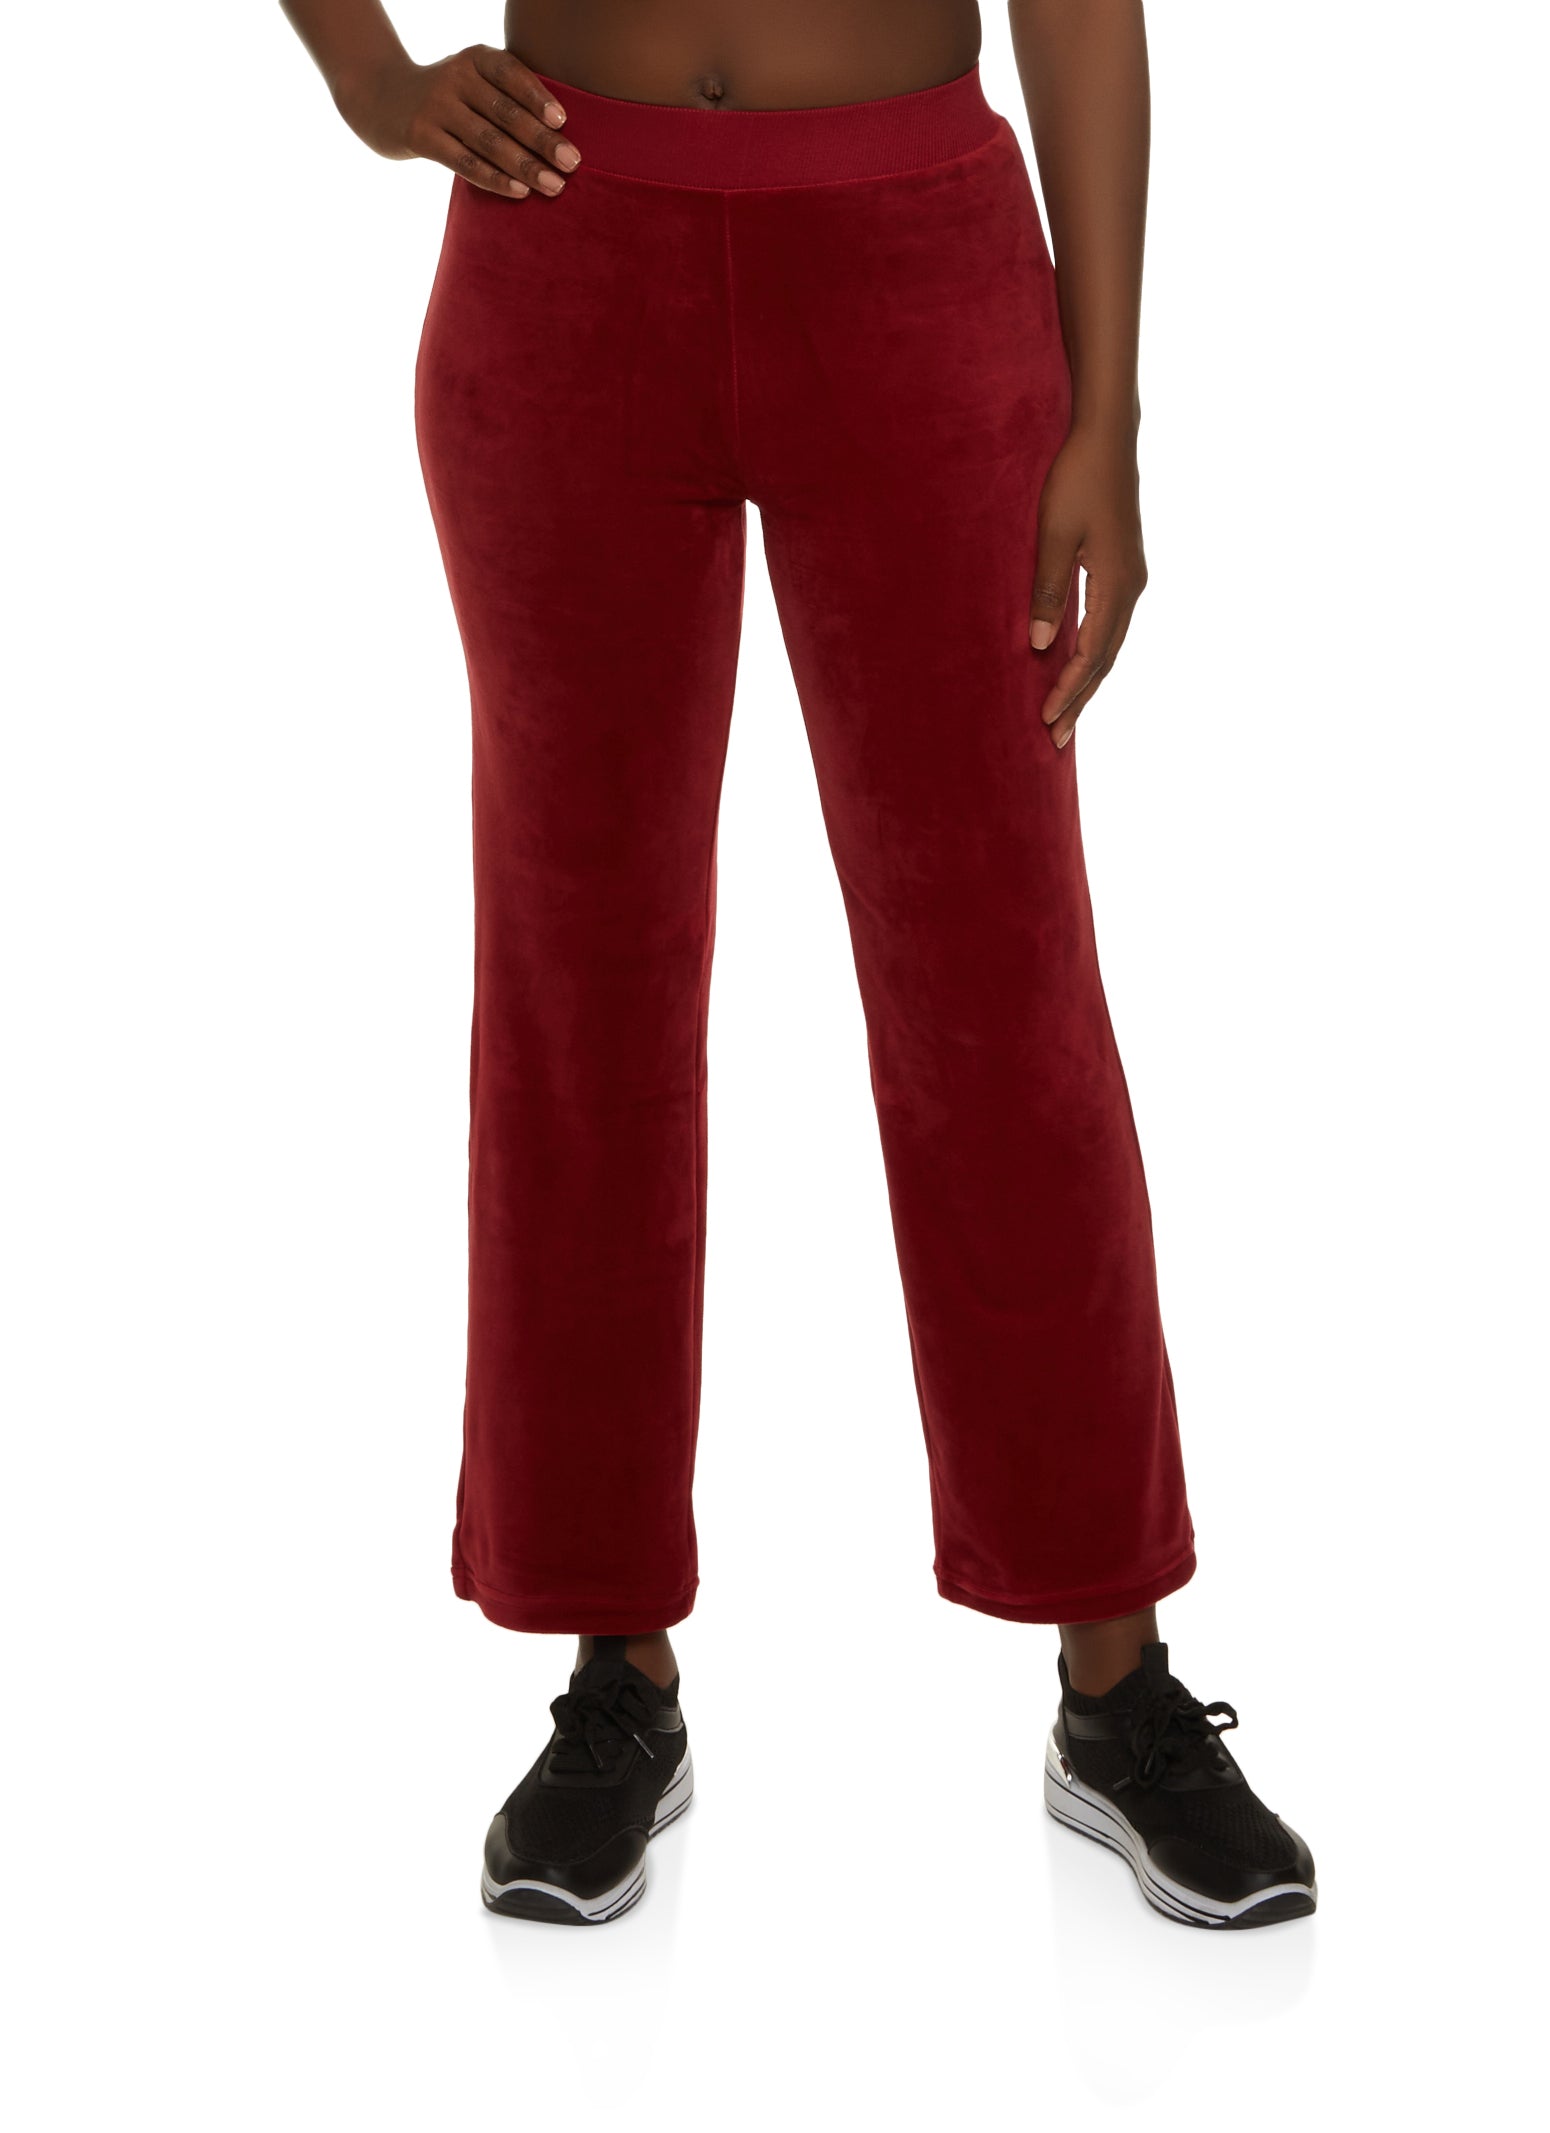 Womens Red Velour Pants, Sweatpants